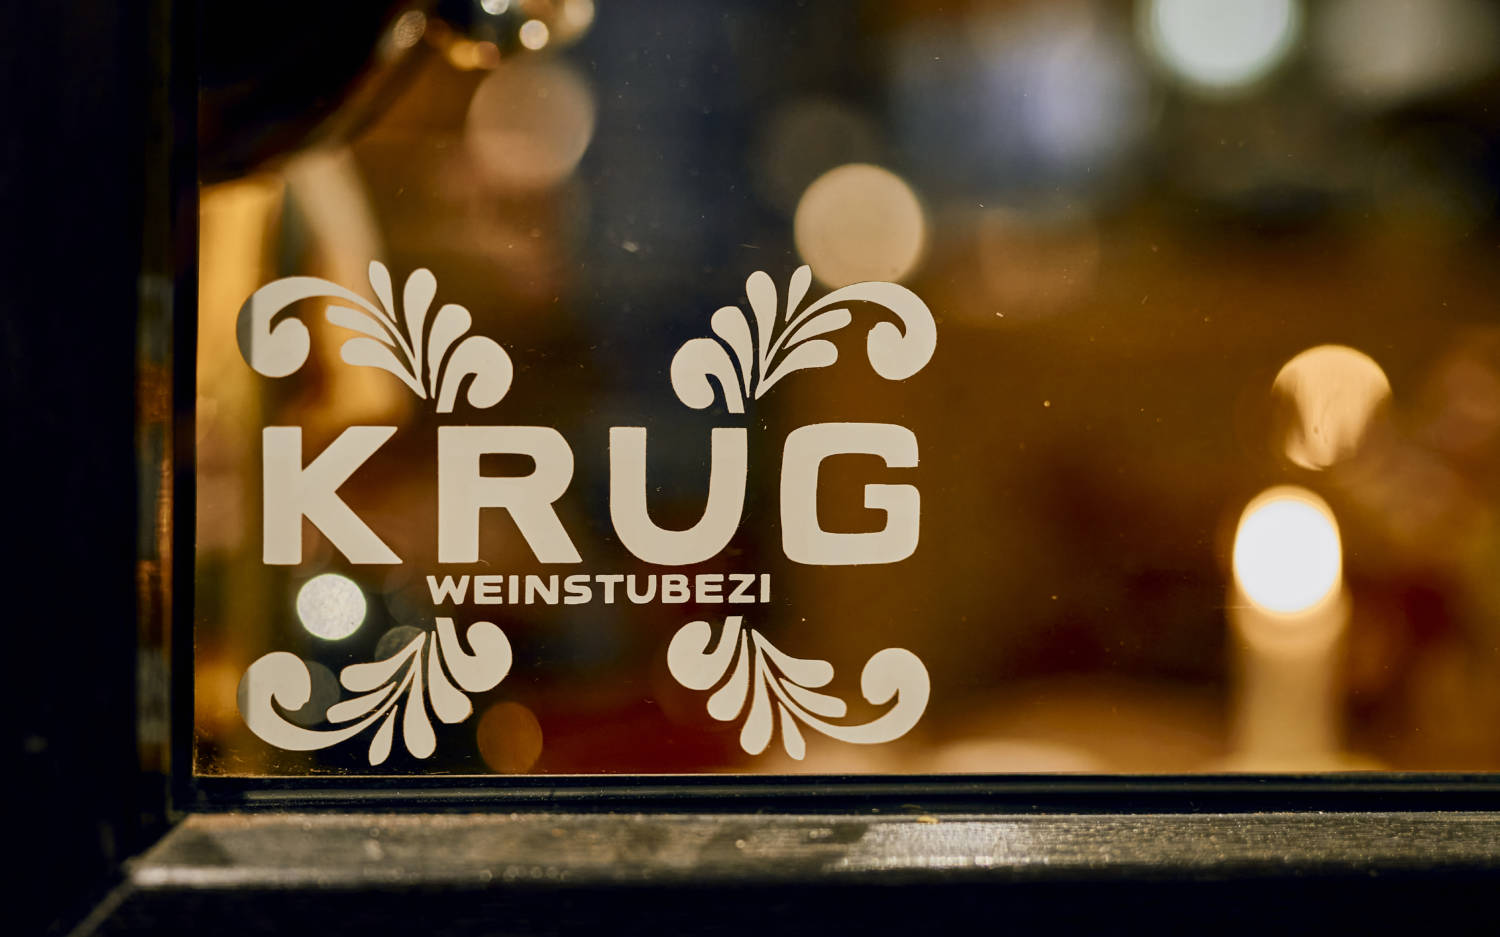 Krug Weinstubezi auf St. Pauli / ©Marc Sill